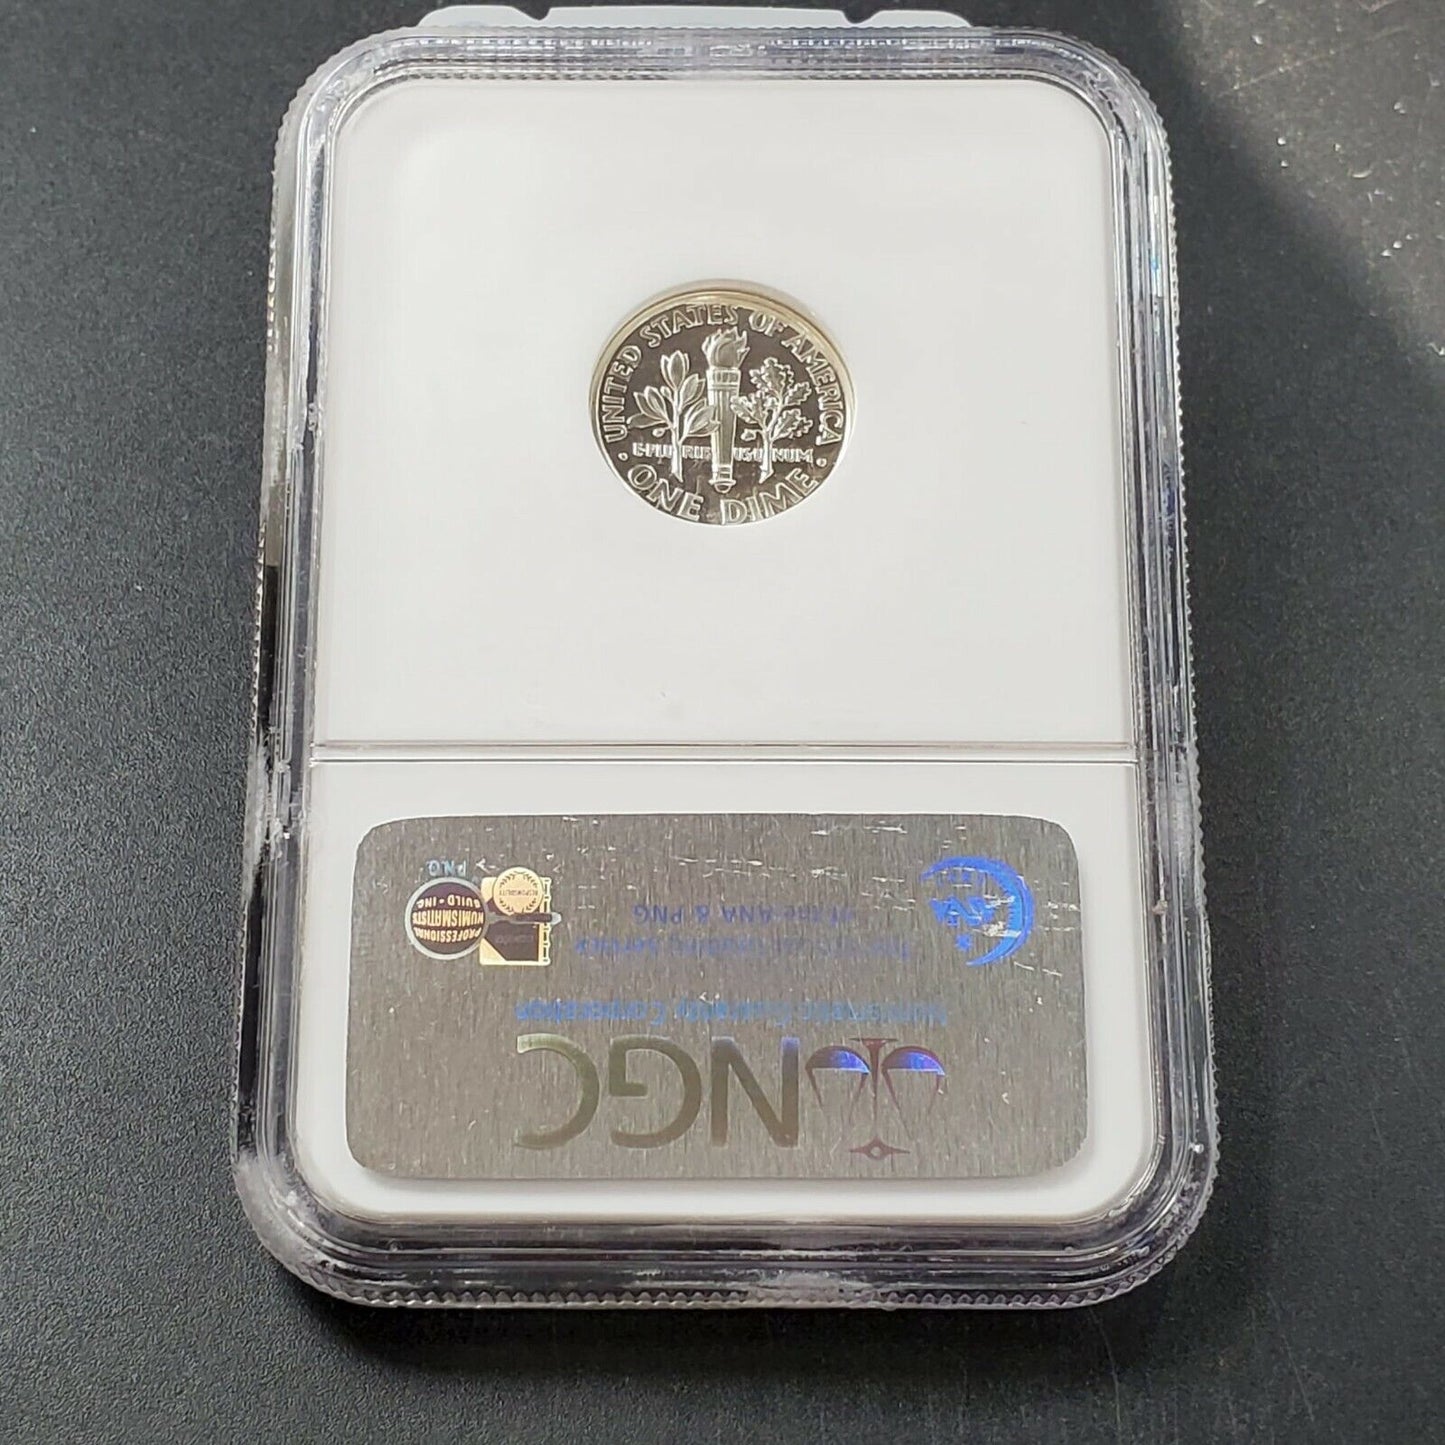 2004 s Roosevelt Proof silver Dime Coin NGC PR70 DCAM UCAM PF70 #3